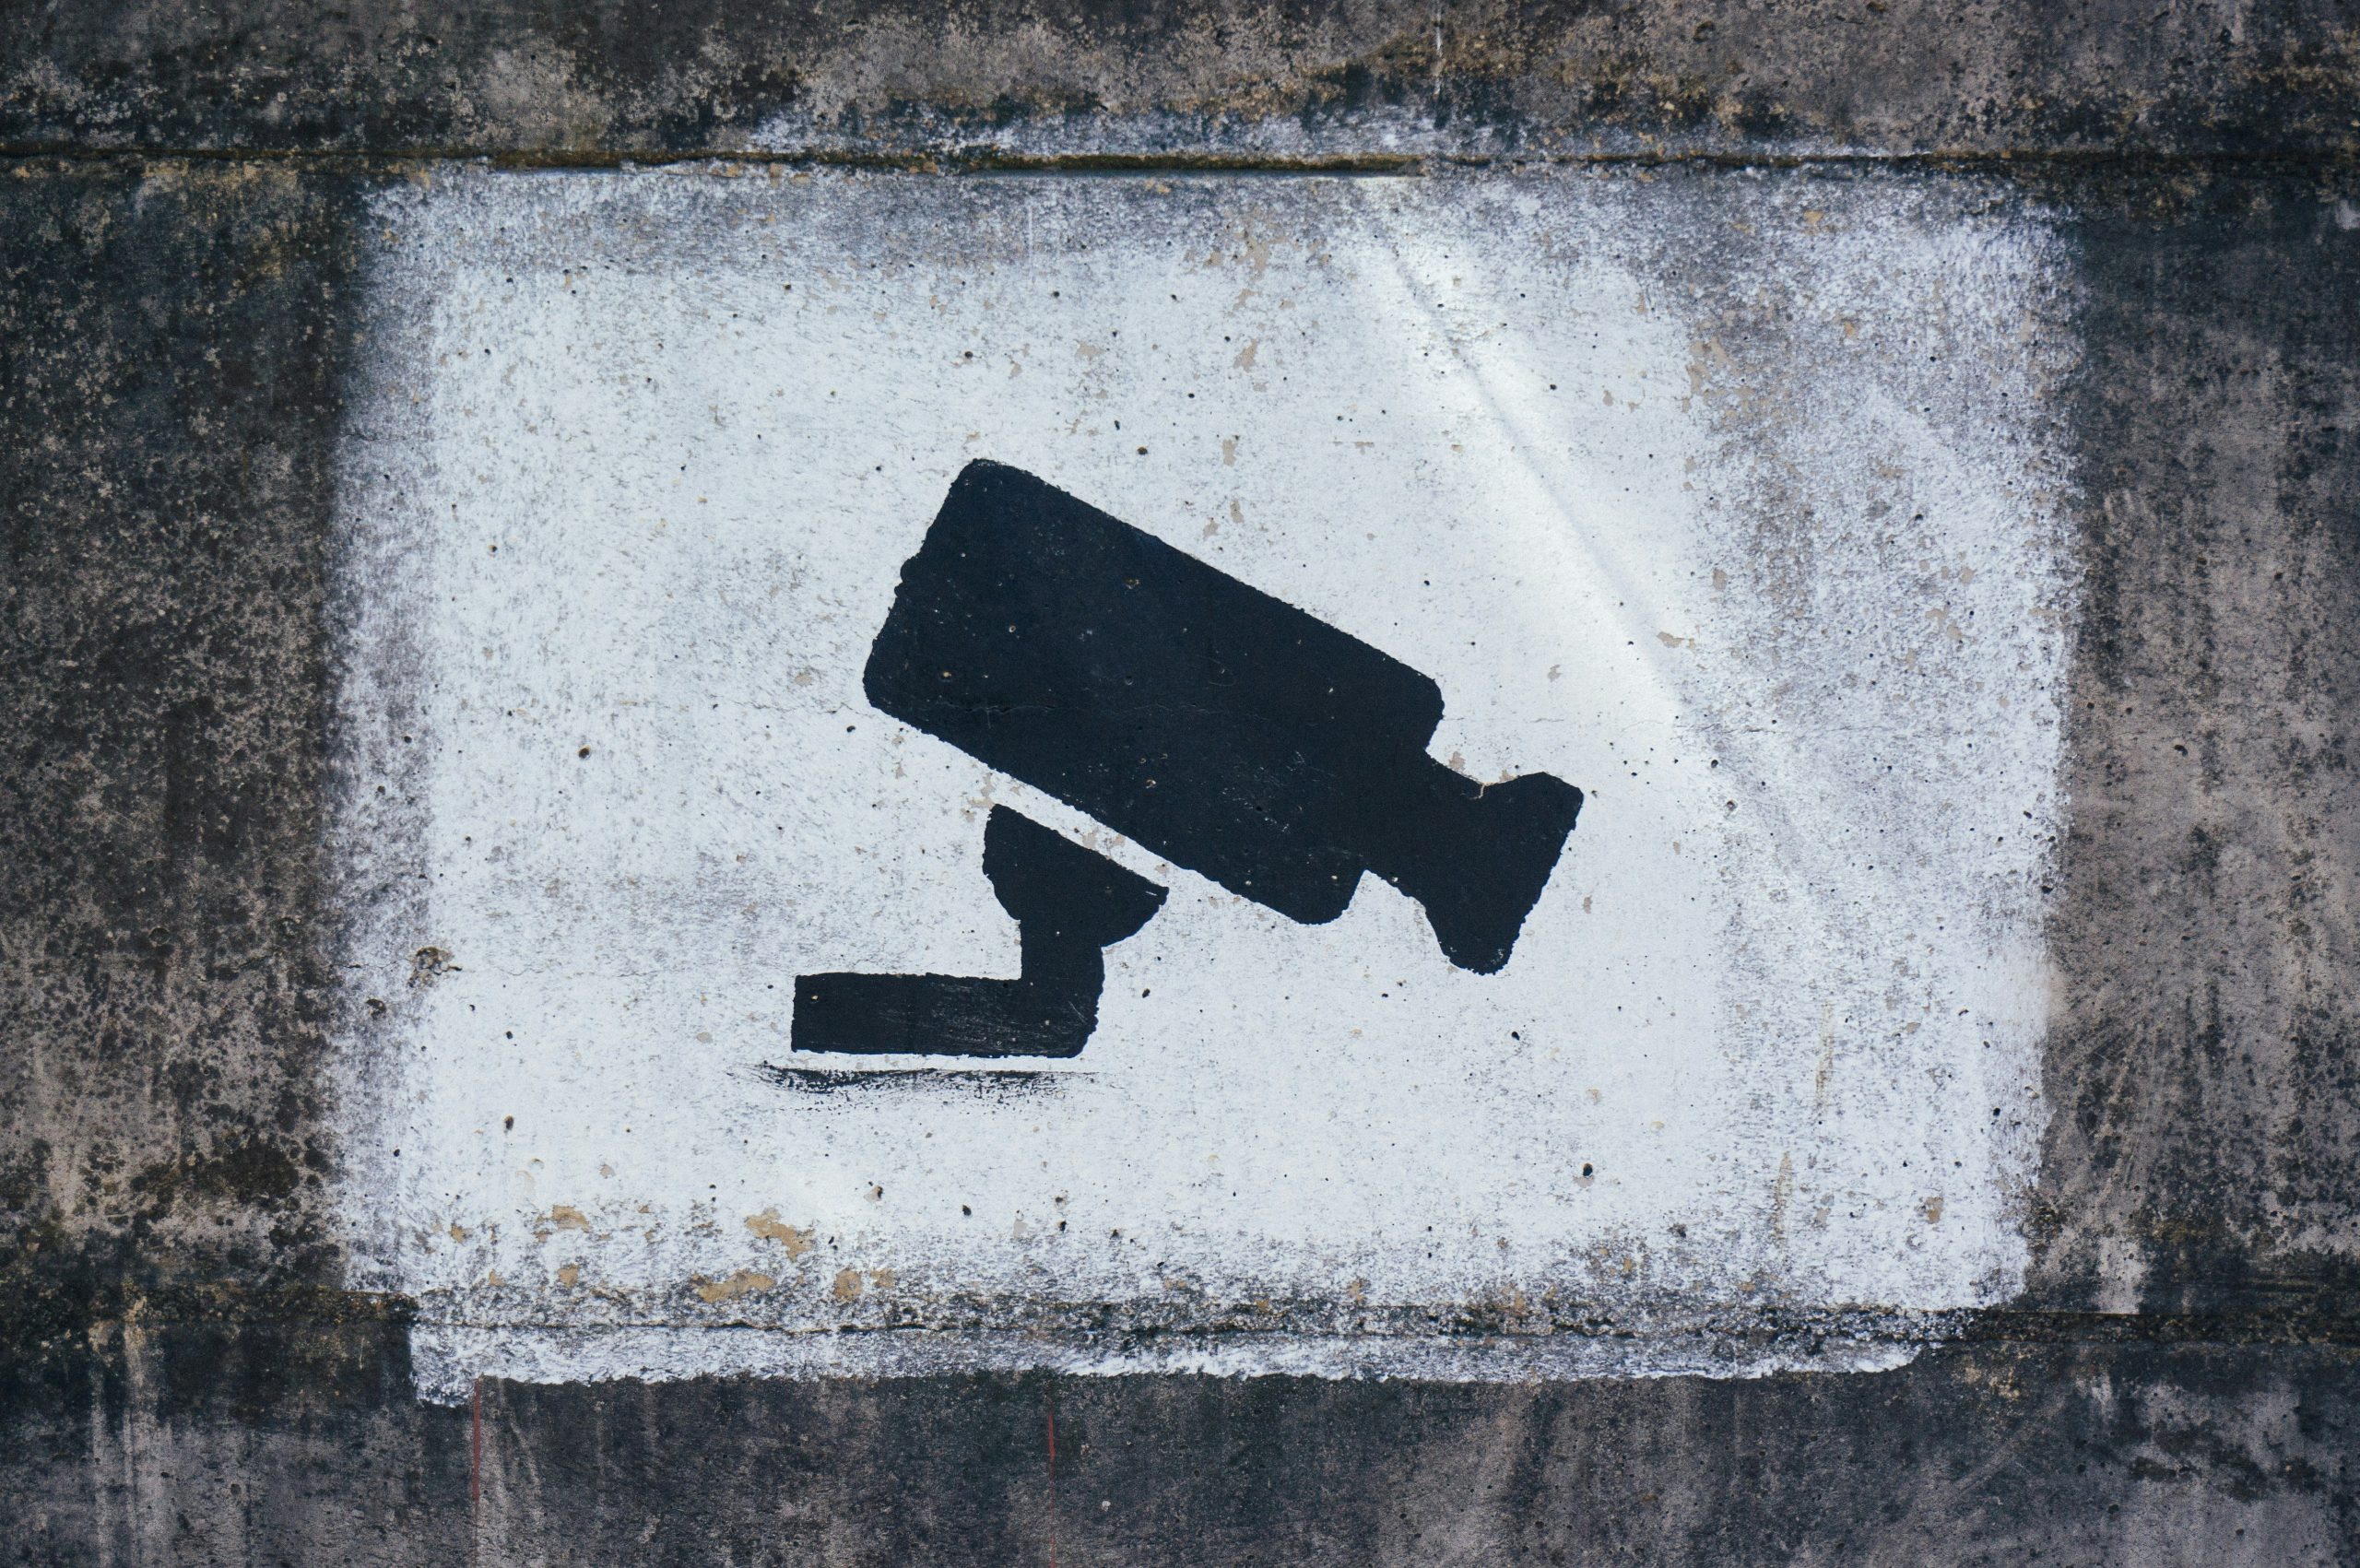 surveillance graffiti